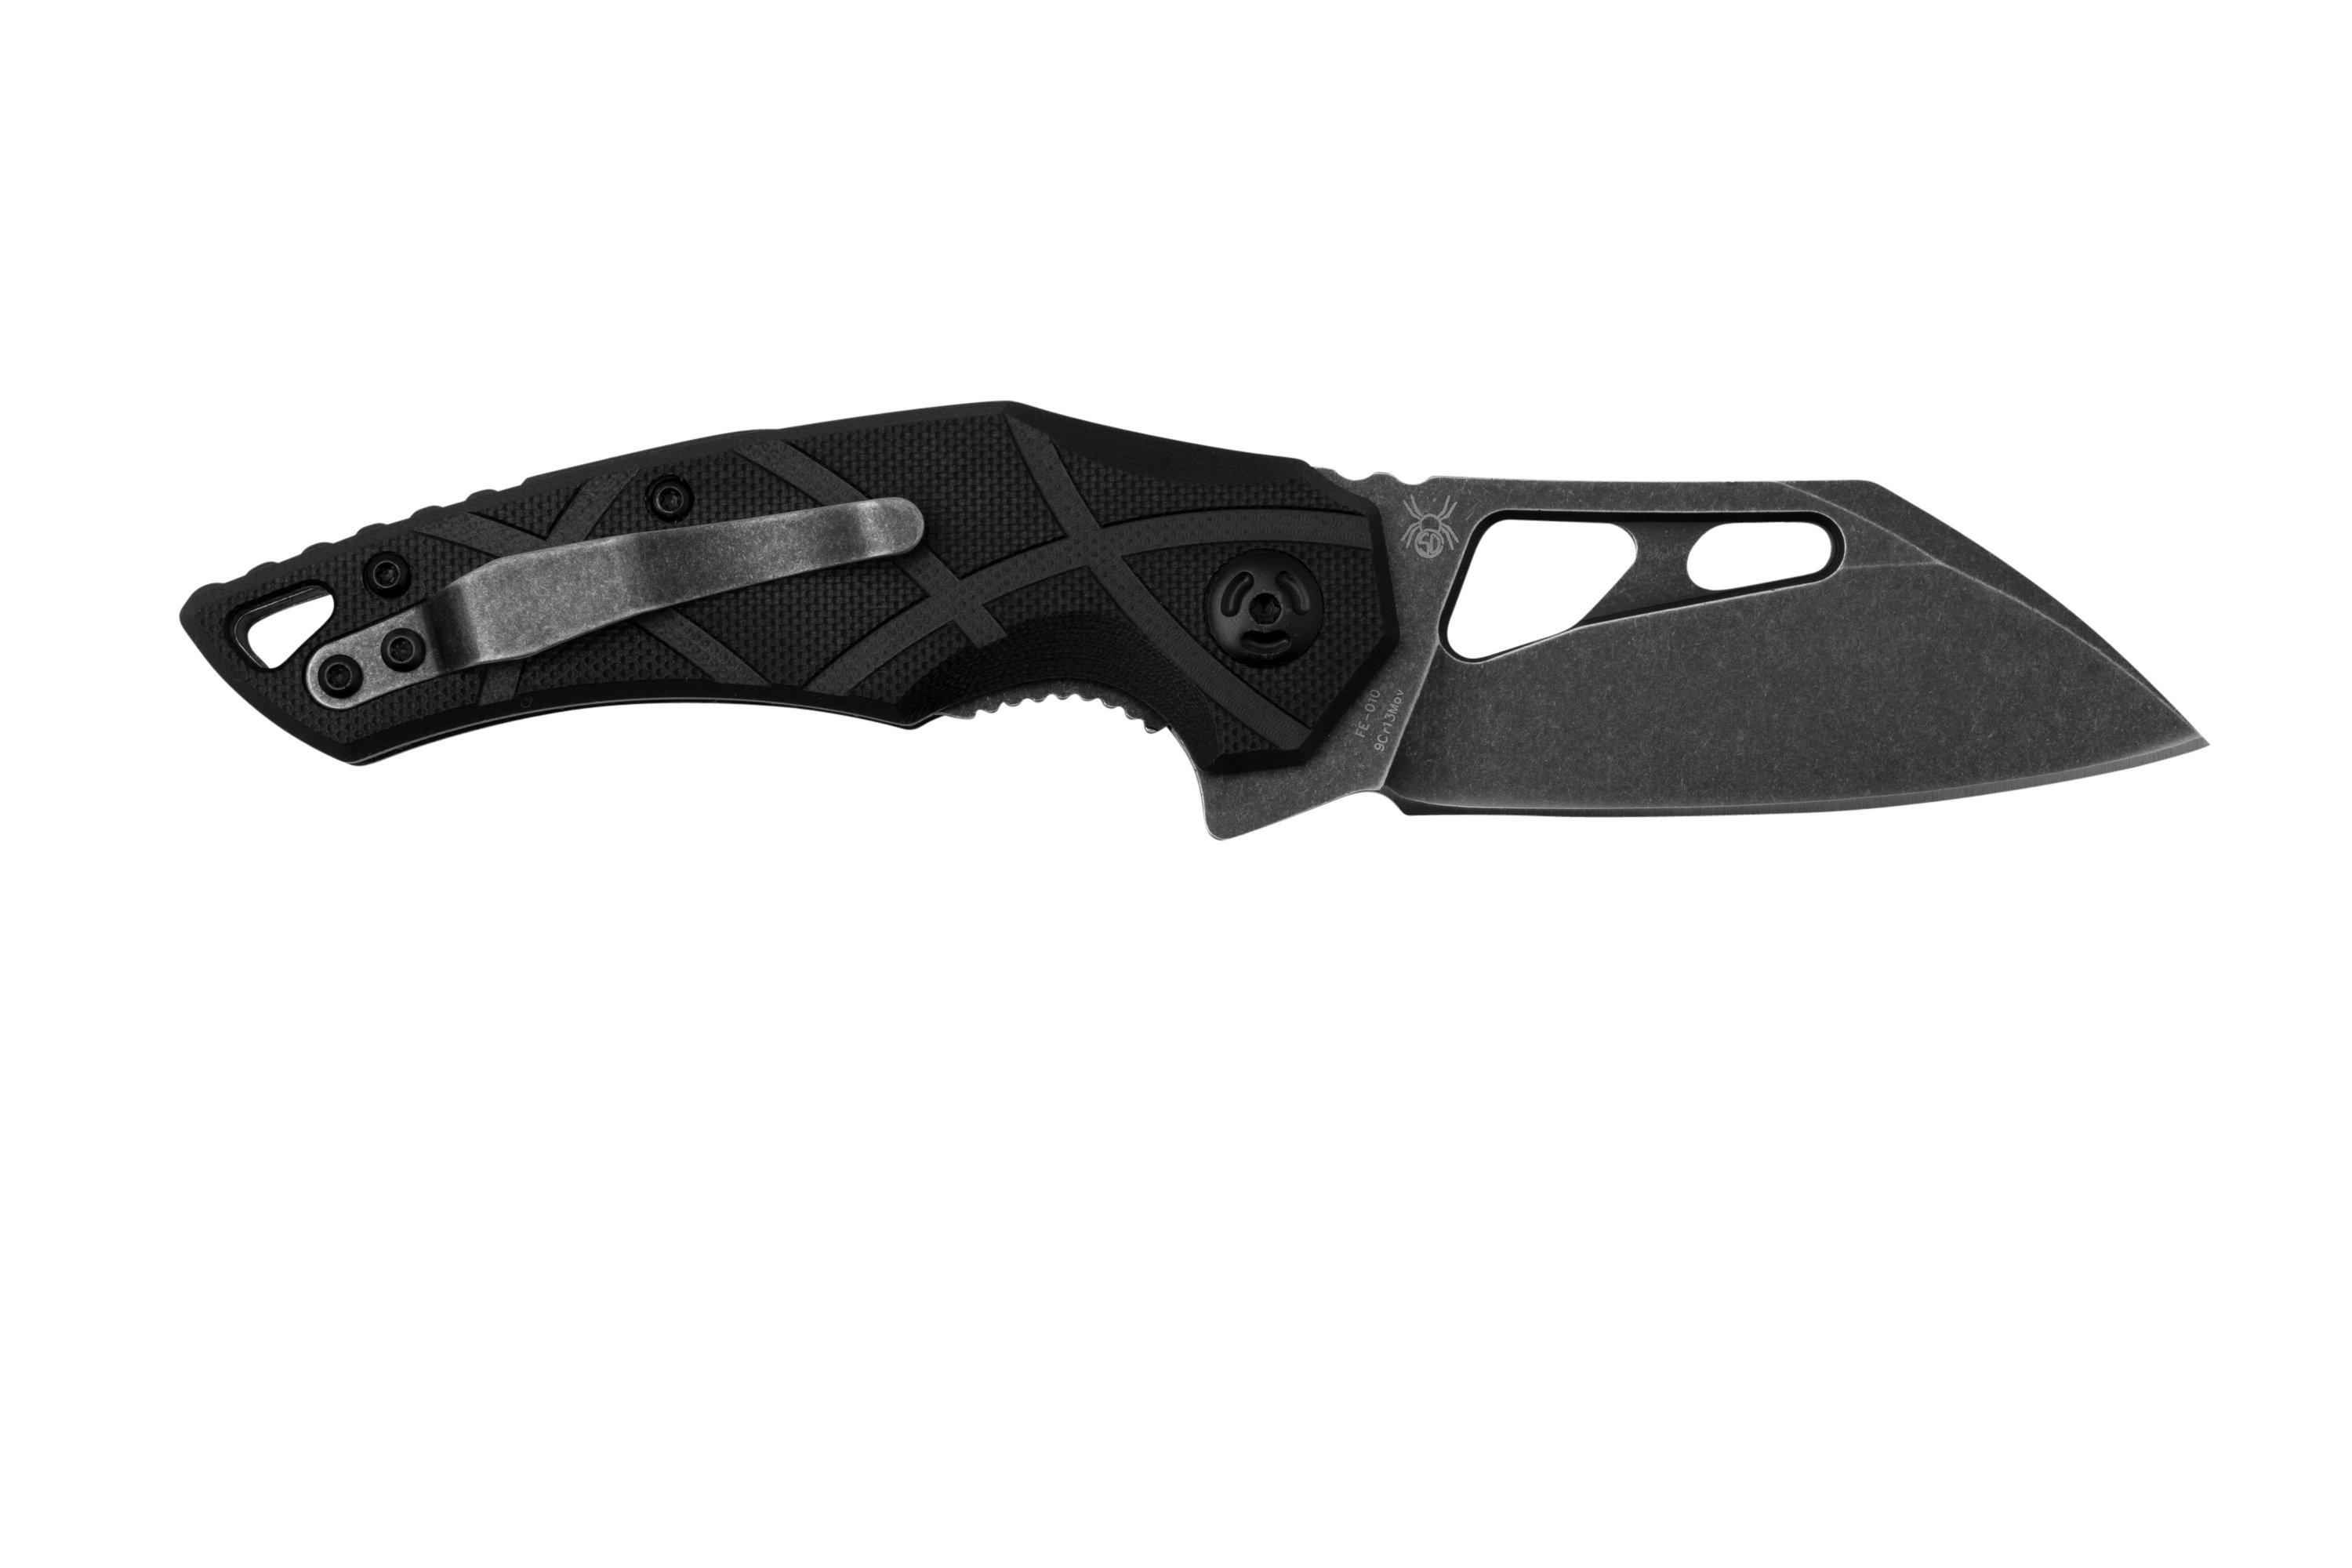 Fox Edge Atrax, Black G10, FE-010 pocket knife | Advantageously ...